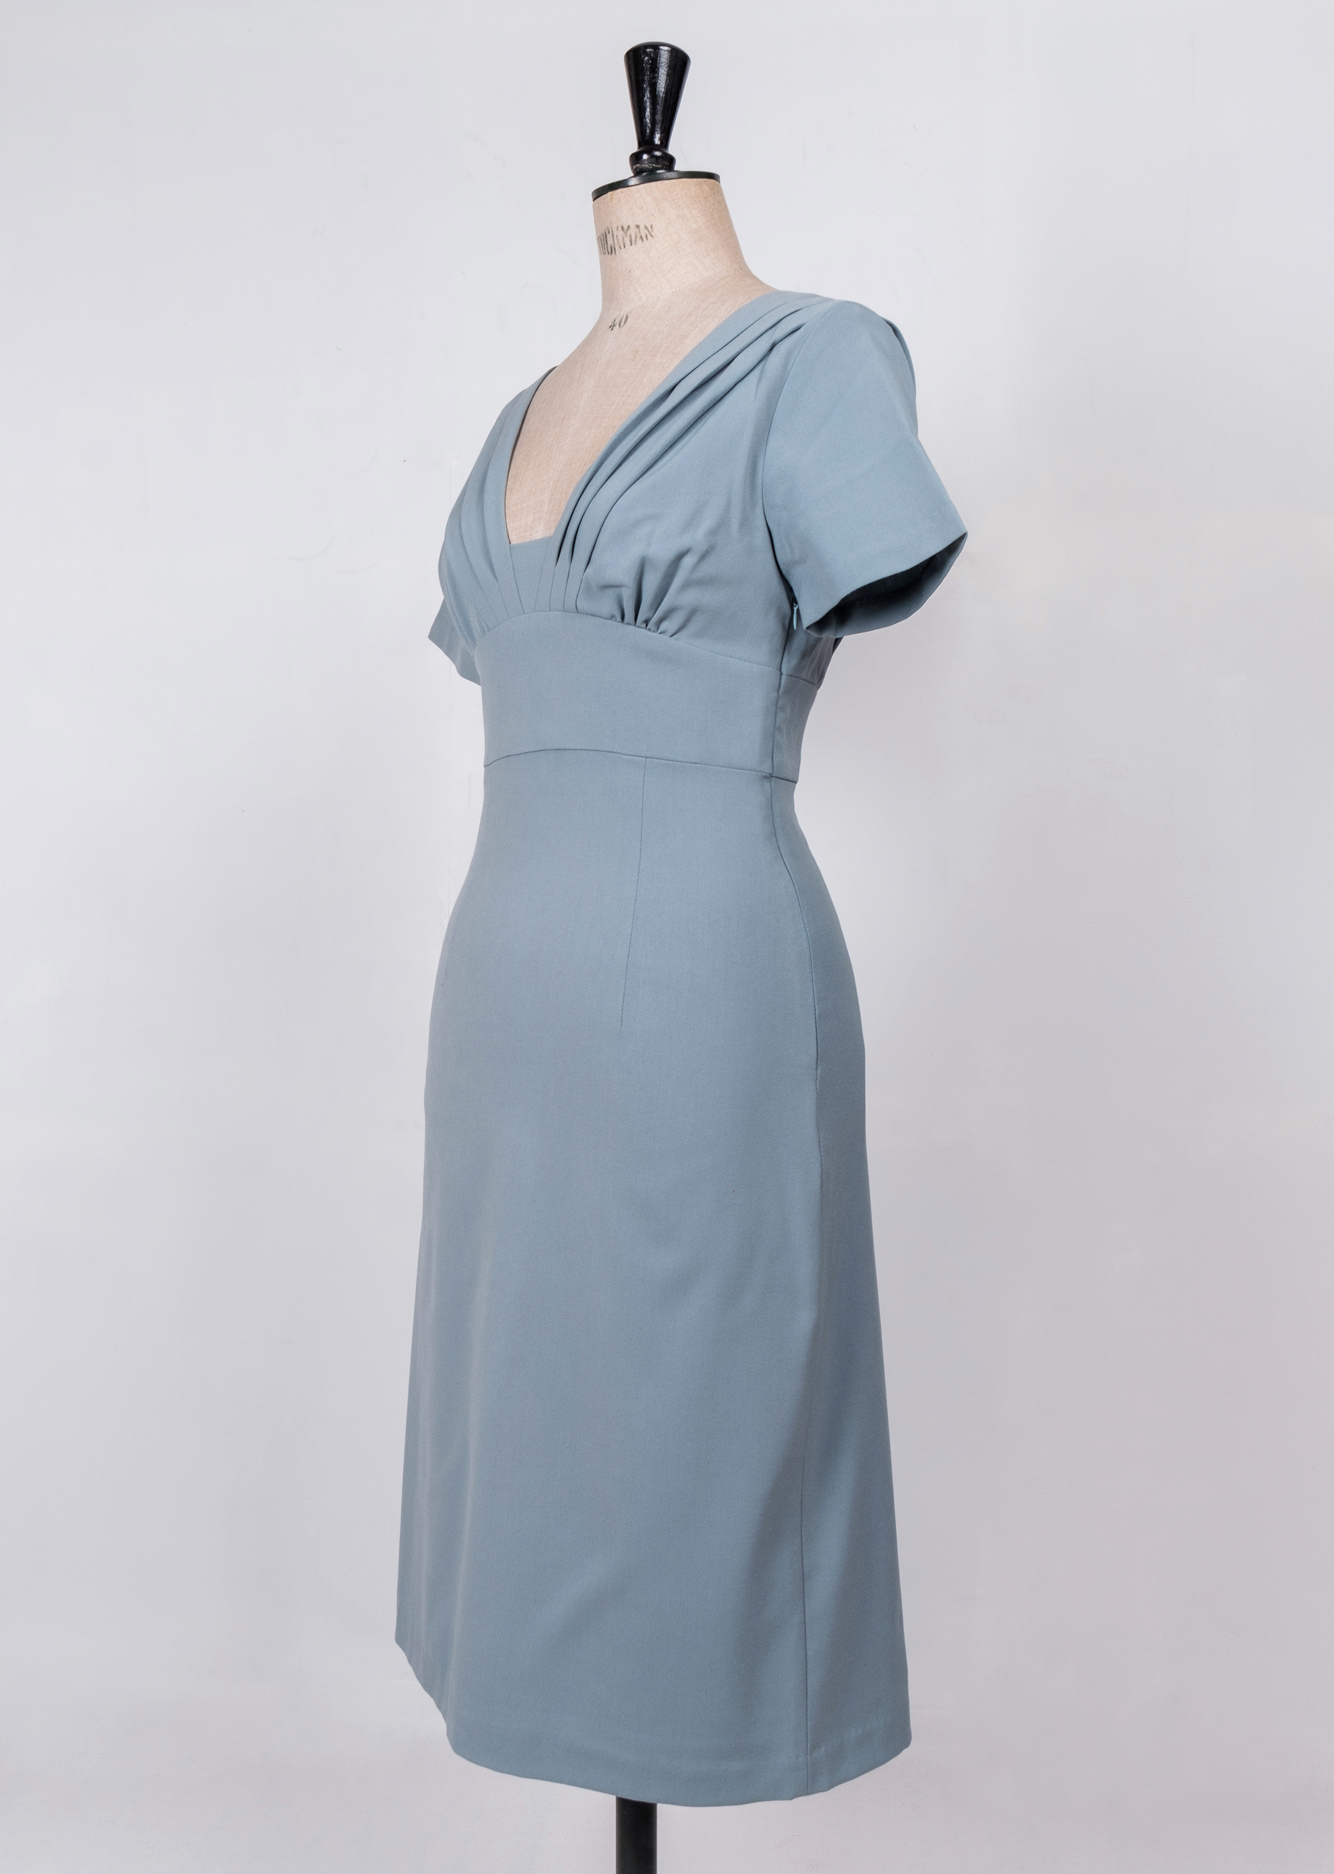 Art Deco 30’s dress (blue-grey) - Dorian Boutique